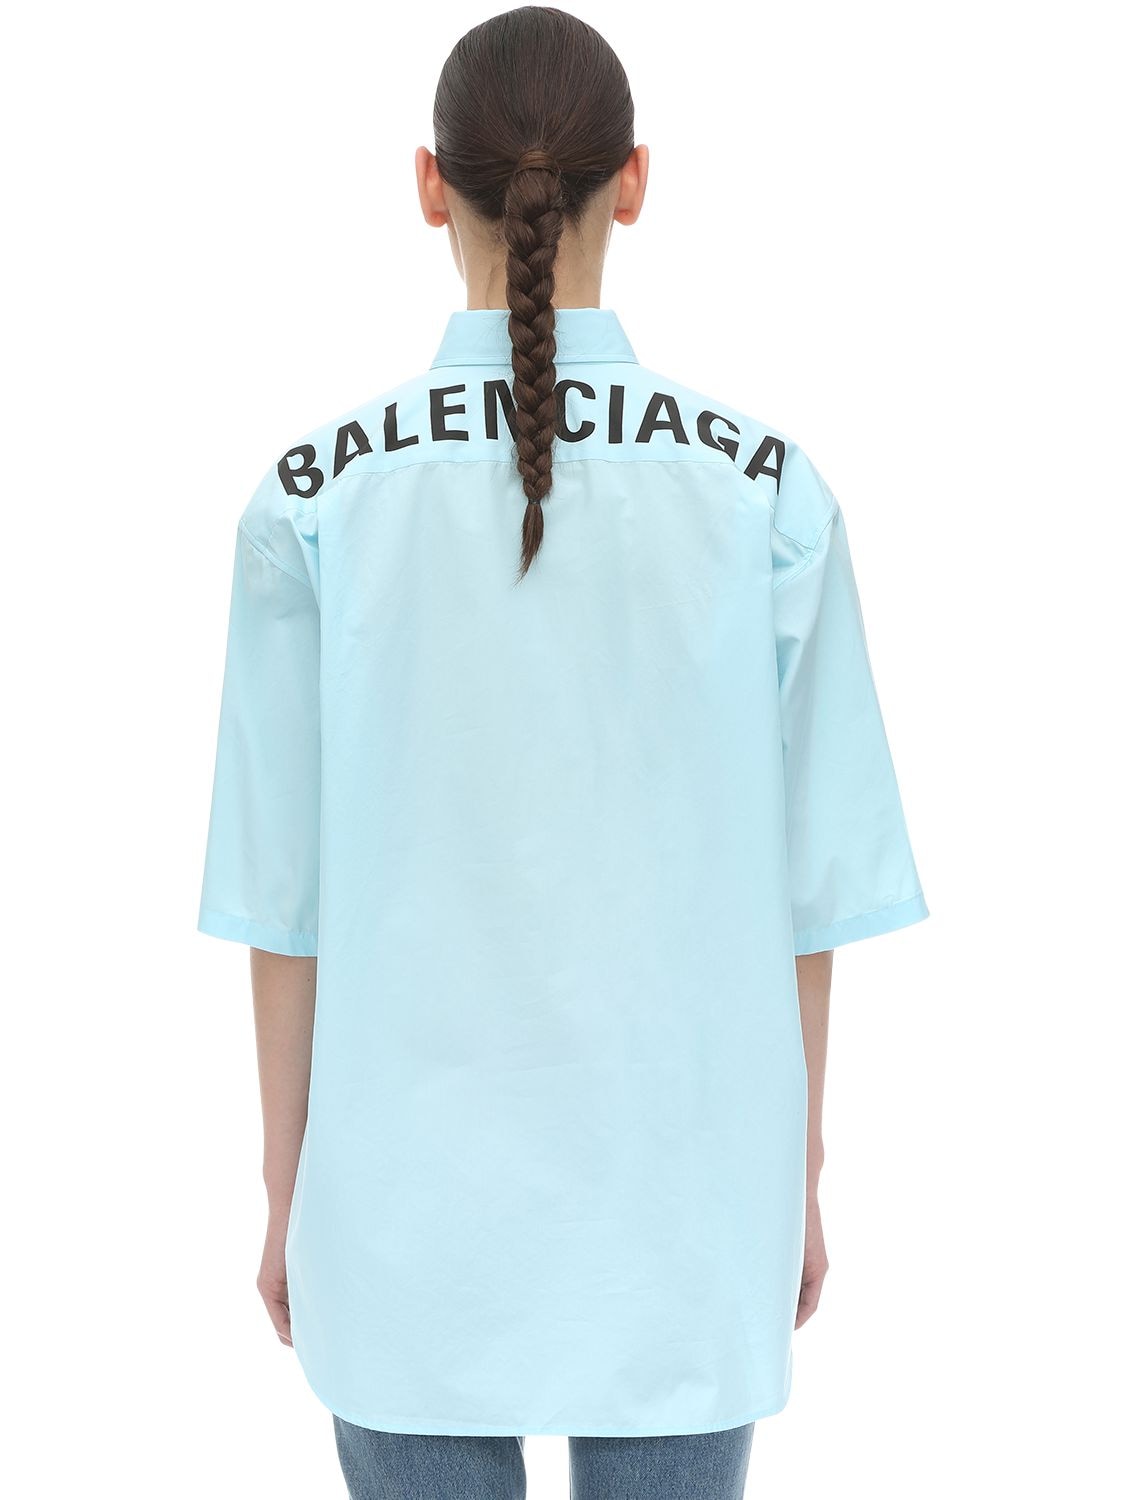 balenciaga button down shirt women's